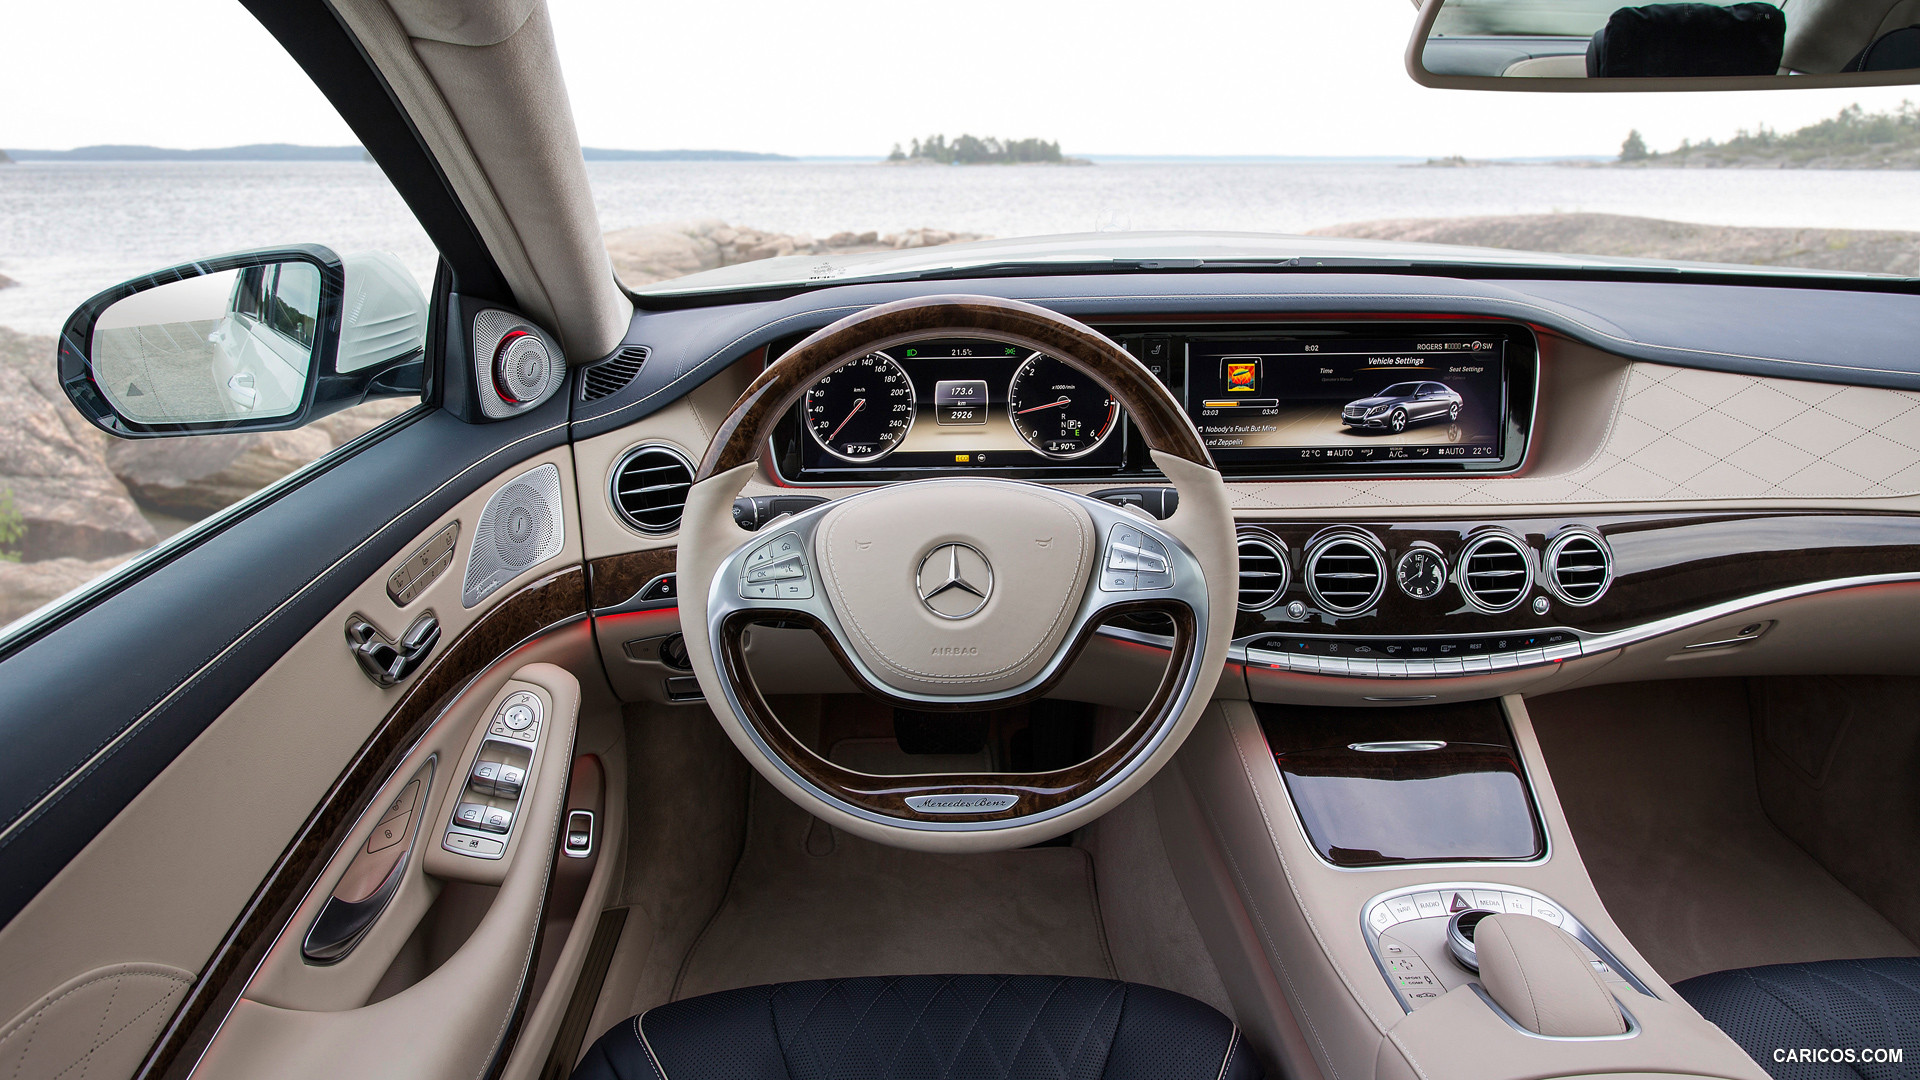 Mercedes Benz 2014 S Class Interior